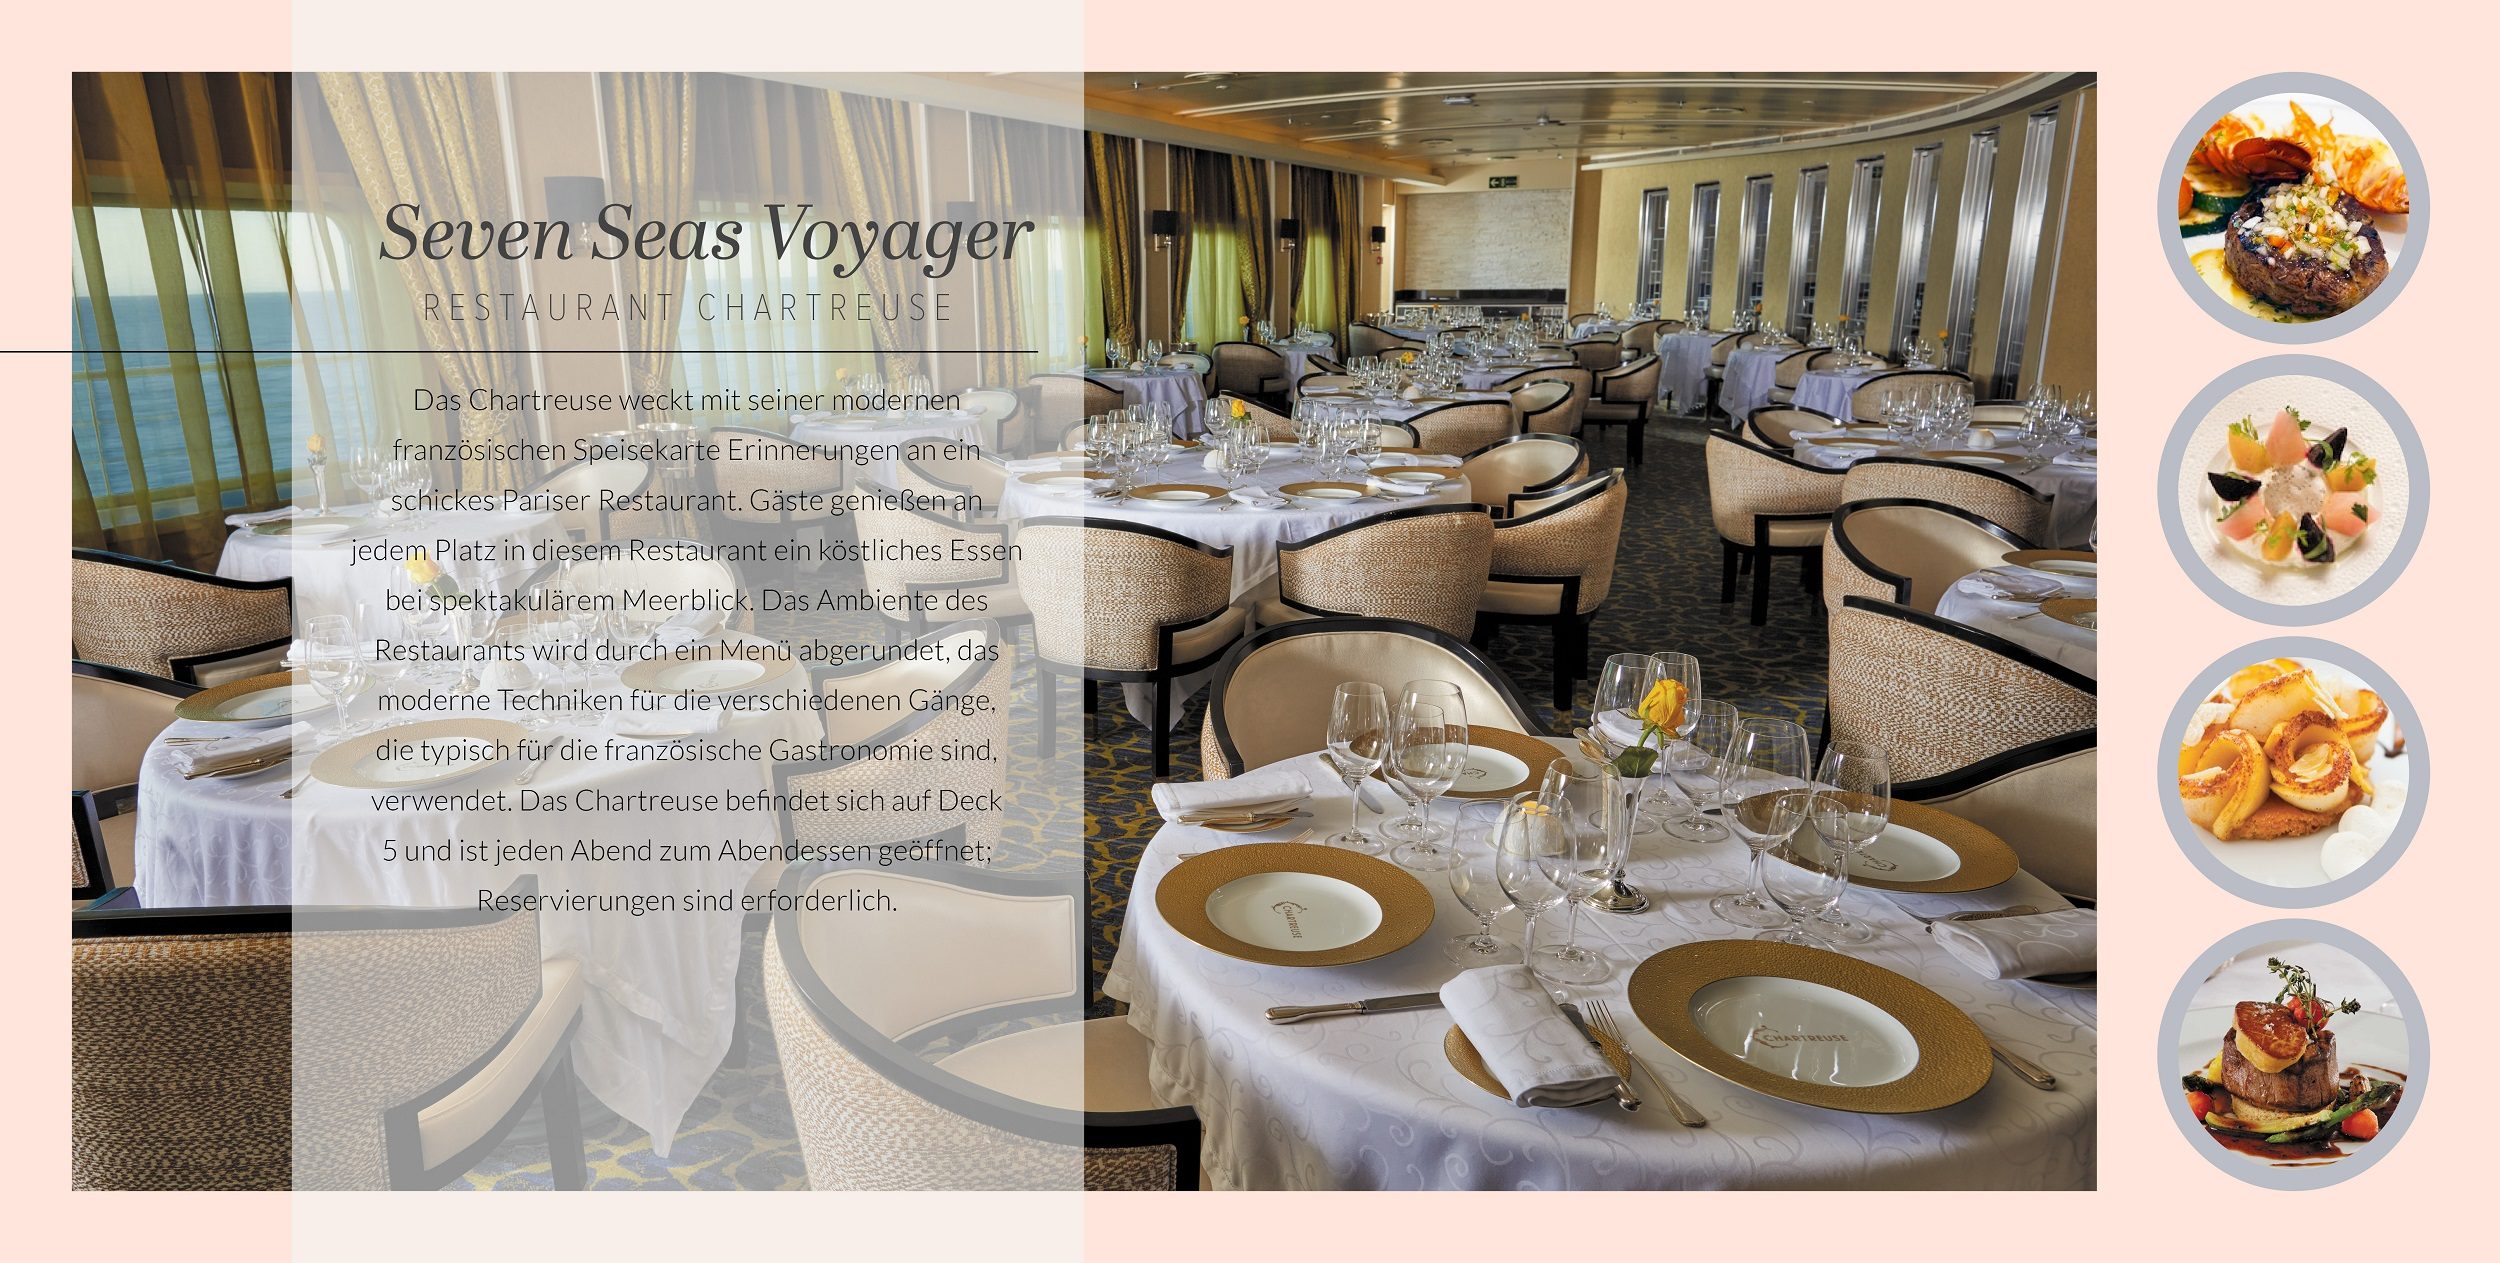 Seven Seas Voyager - Restaurant Chartreuse